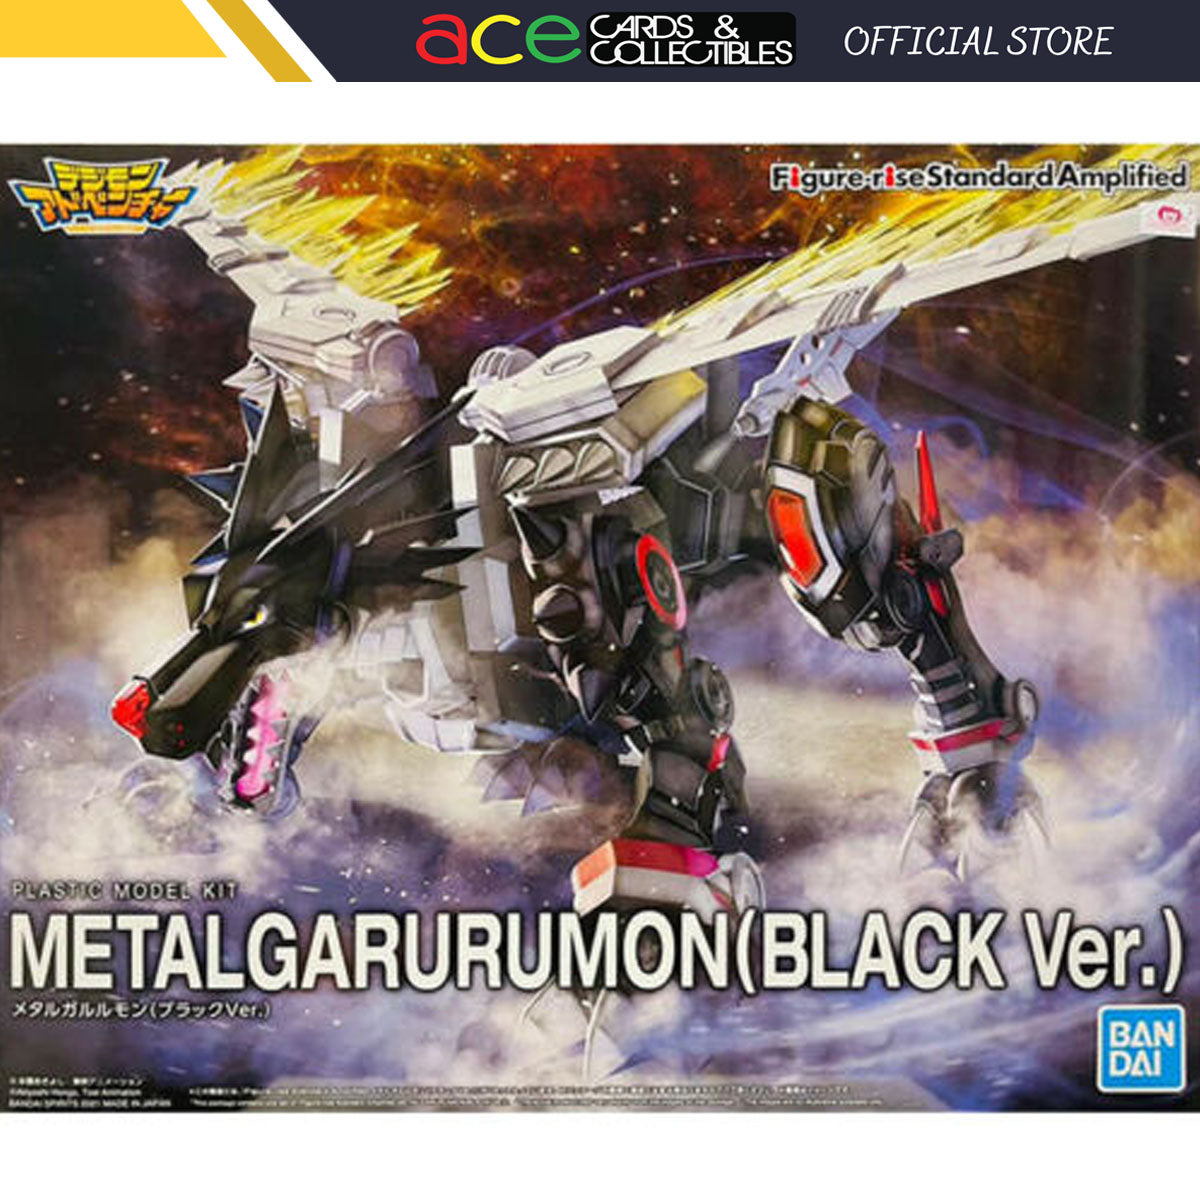 Digimon Figure-rise Standard Black Metal Garurumon (Amplified)-Bandai-Ace Cards &amp; Collectibles